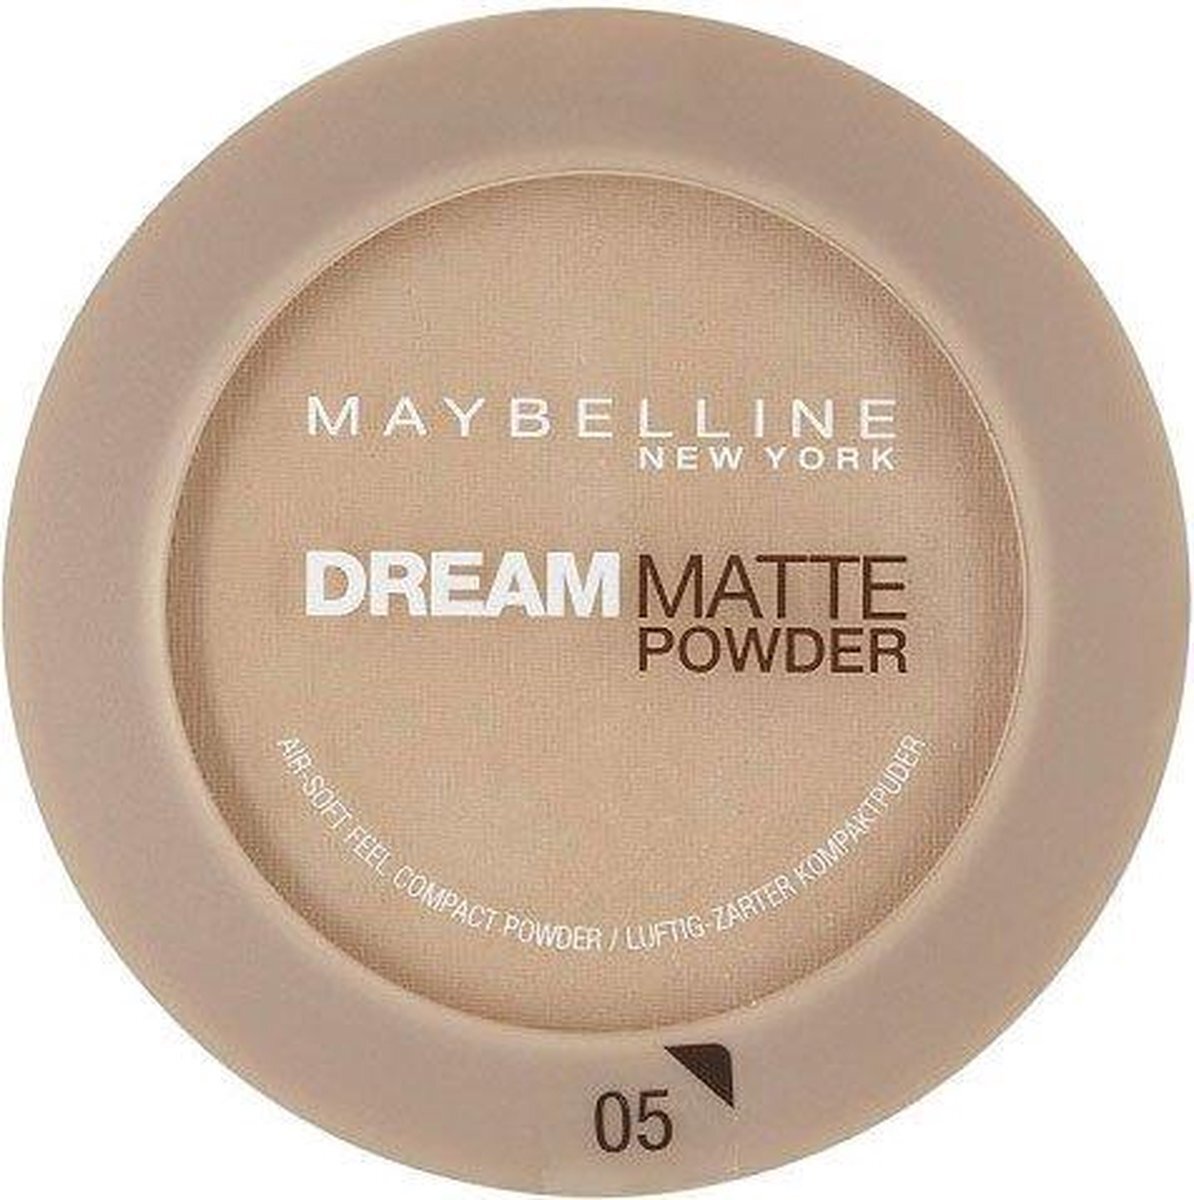 Maybelline Dream Matte Powder - 05 Apricot Beige